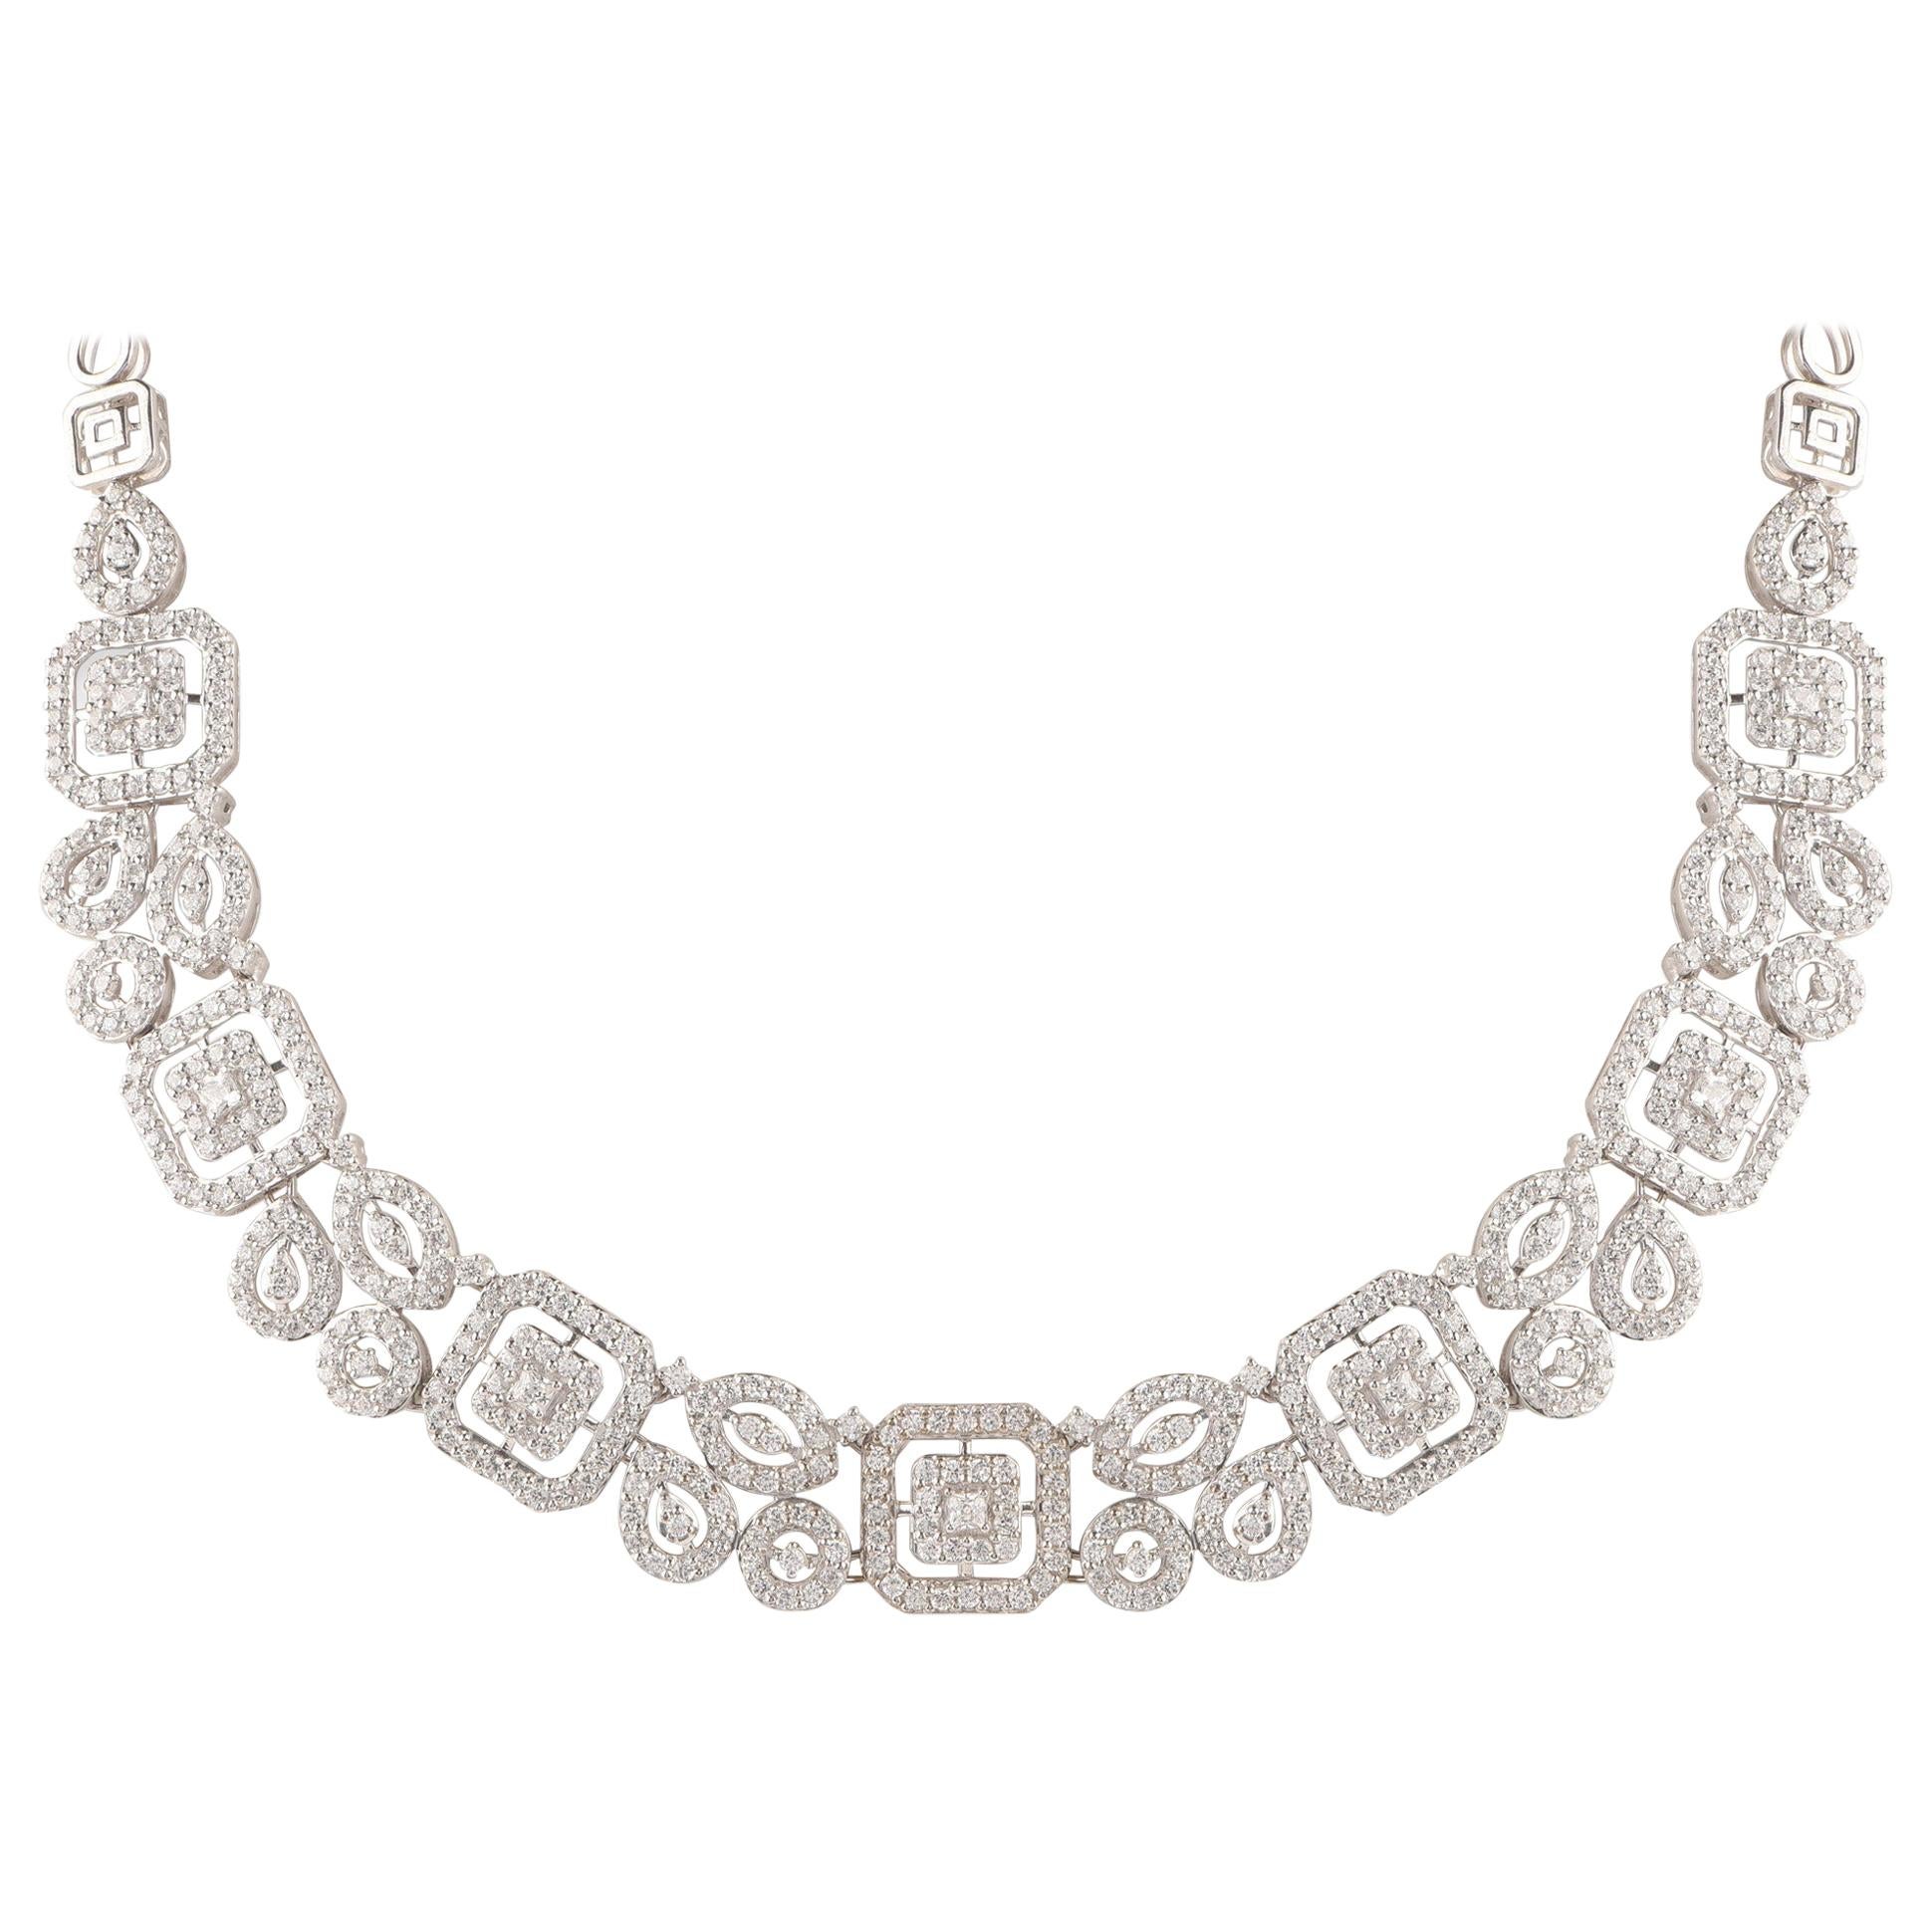  Superbe collier de mariage en or blanc 18 carats avec diamants de 5,50 carats certifiés TJD